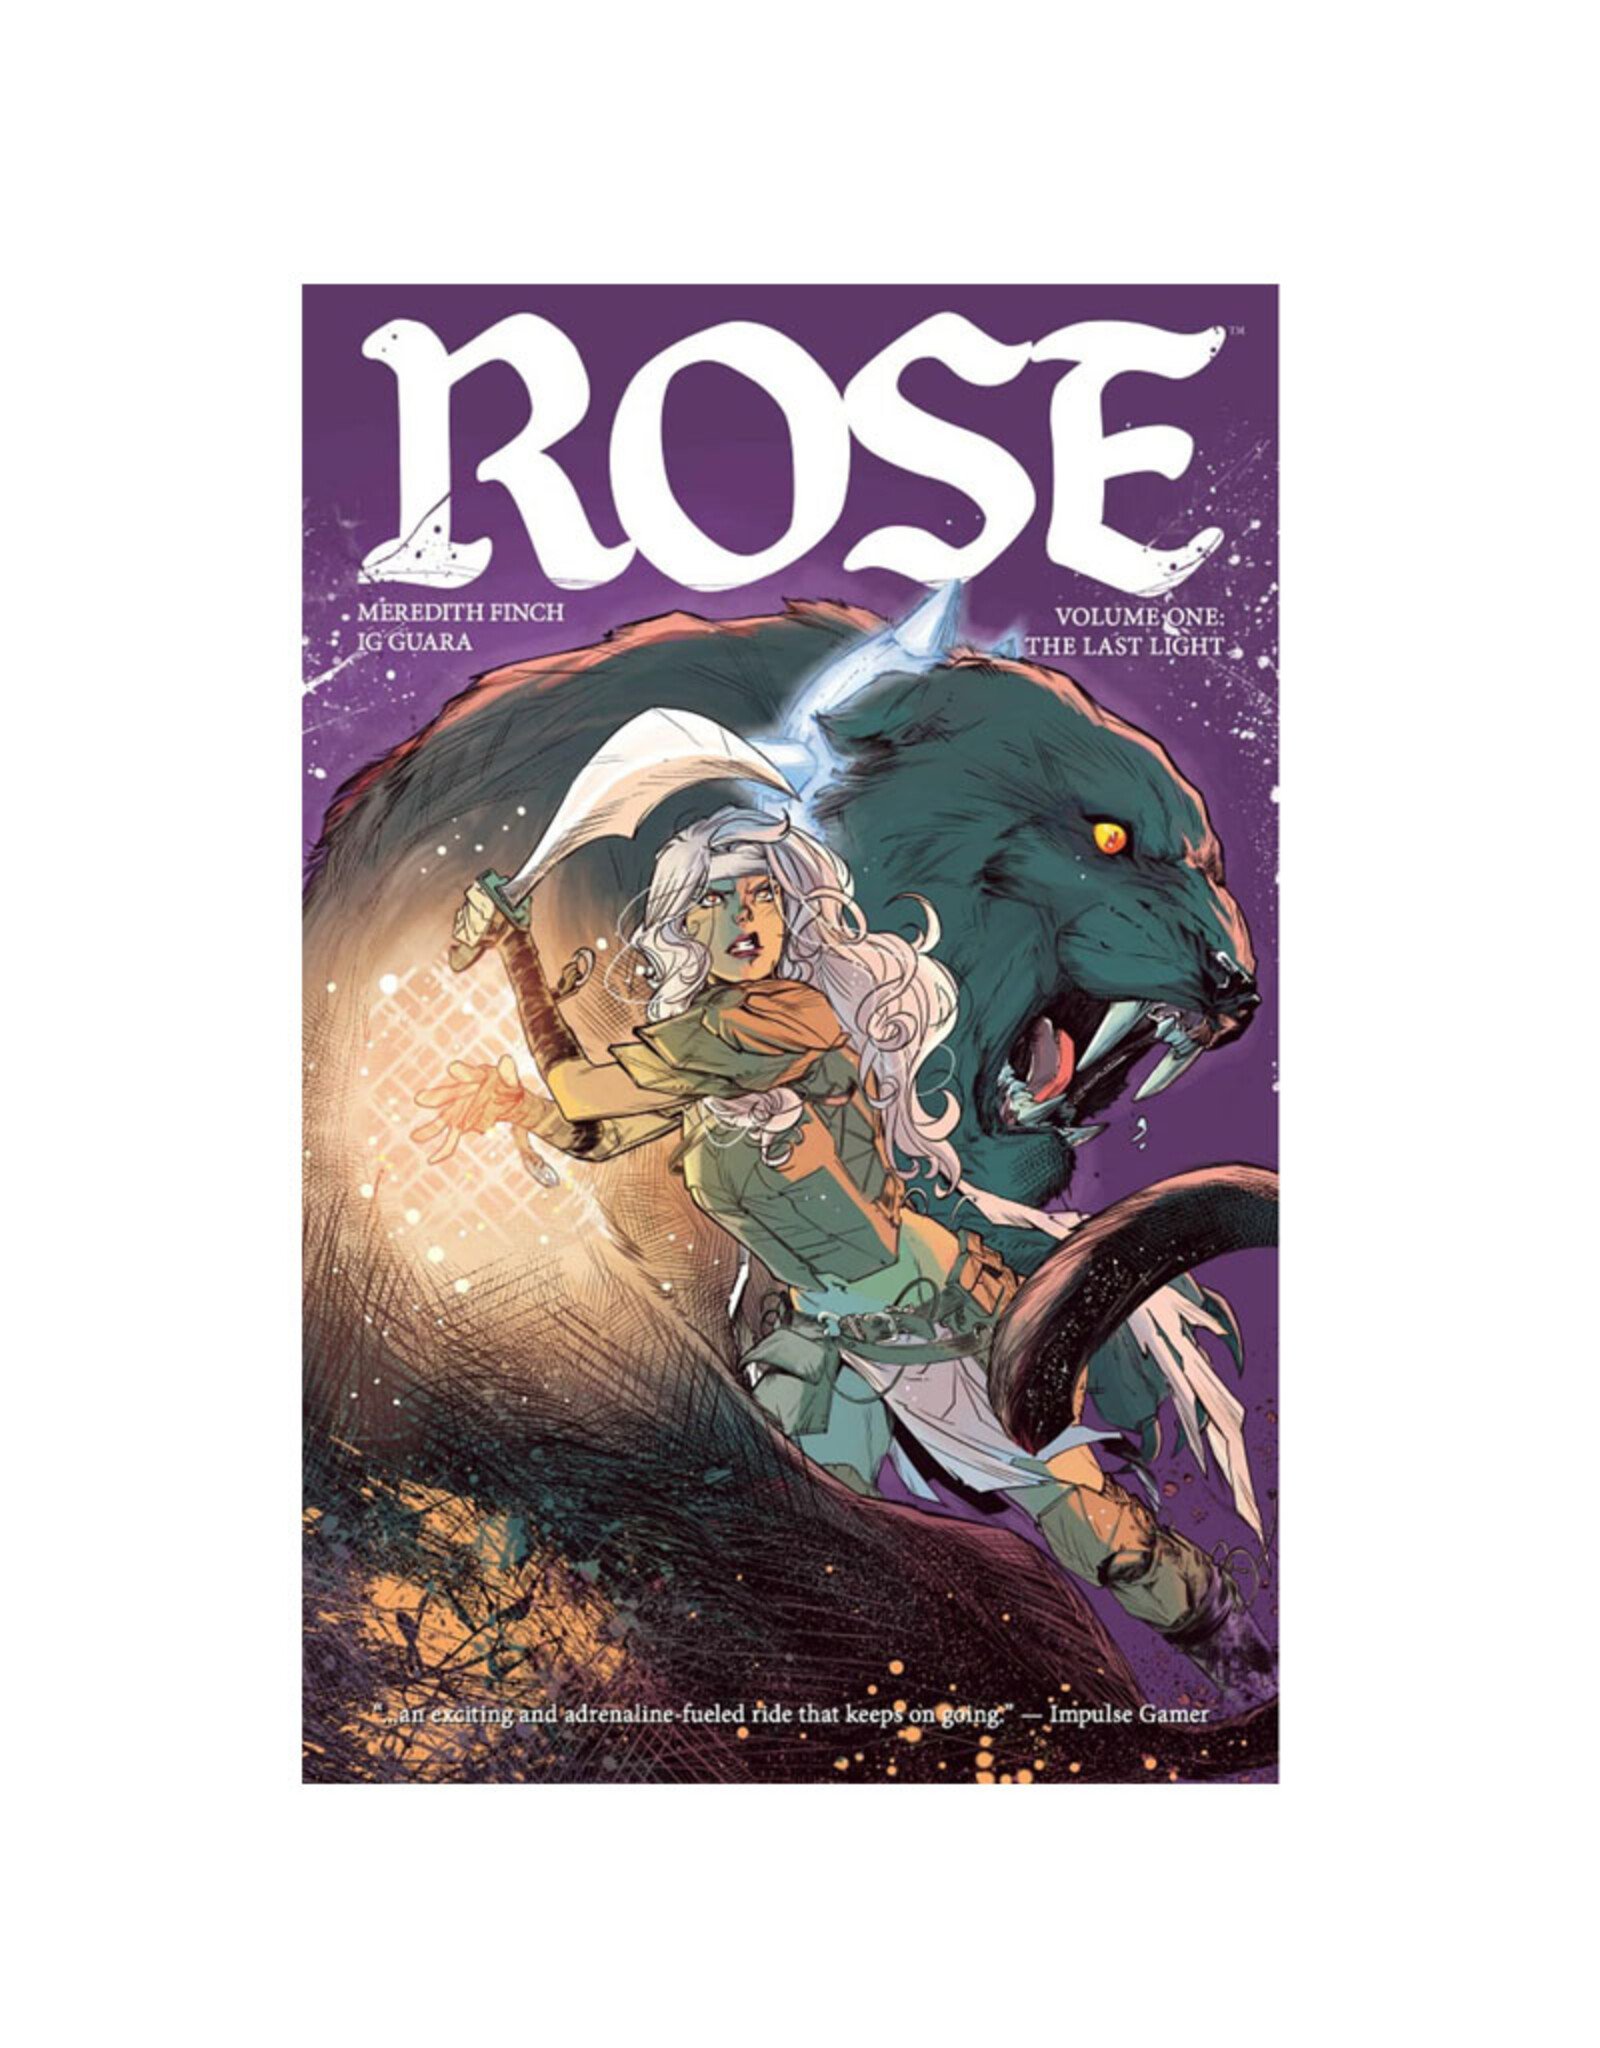 Image Comics Rose TP Volume 01